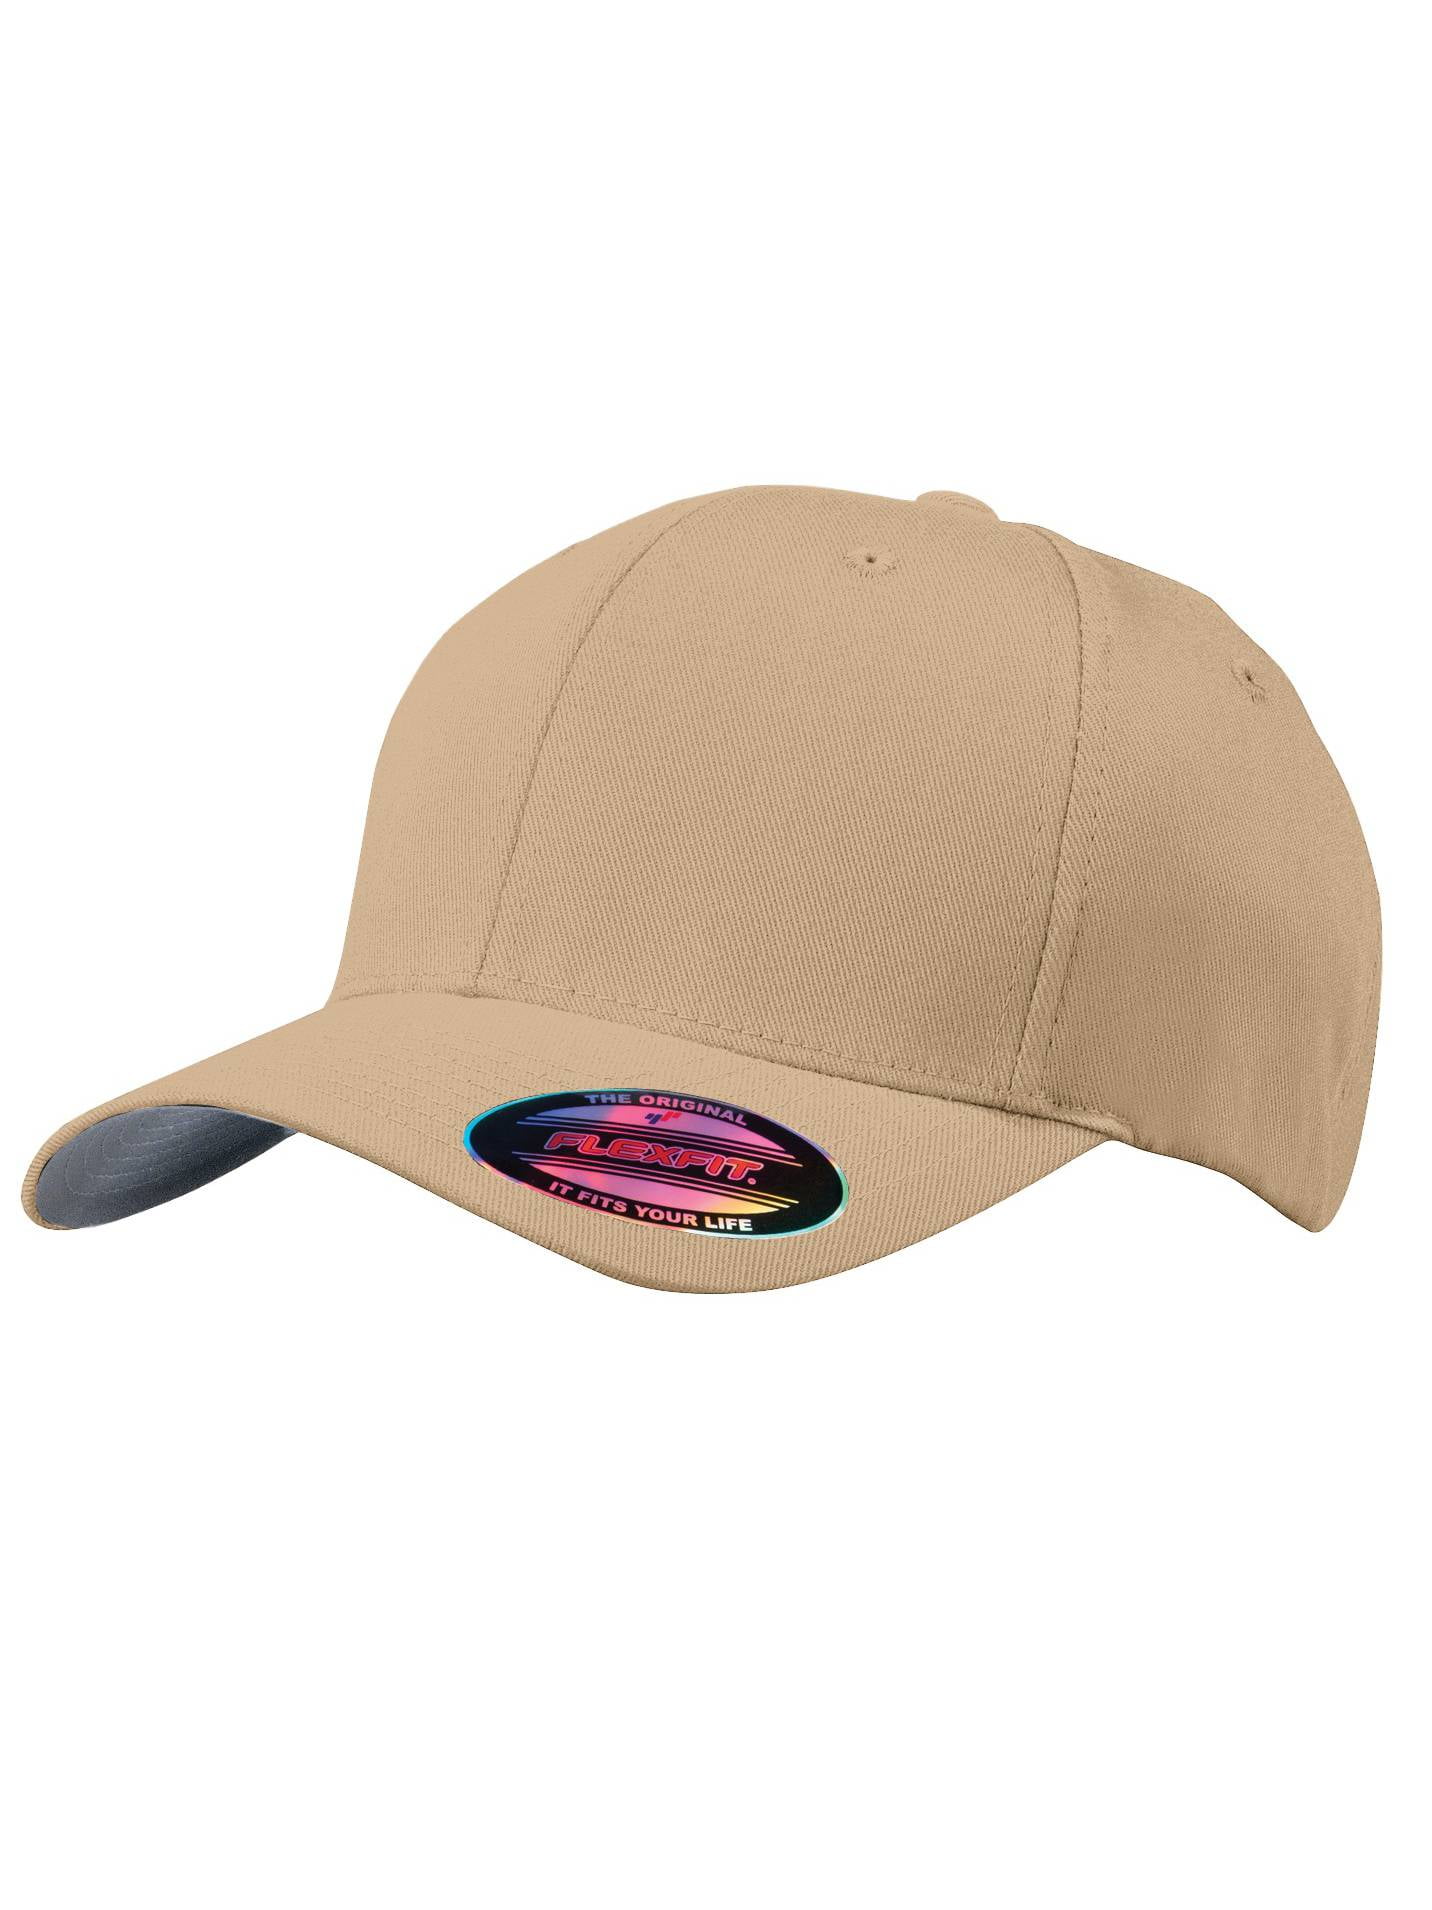 Top Headwear Flex Fit Baseball Cap - Khaki - Large/X-Large